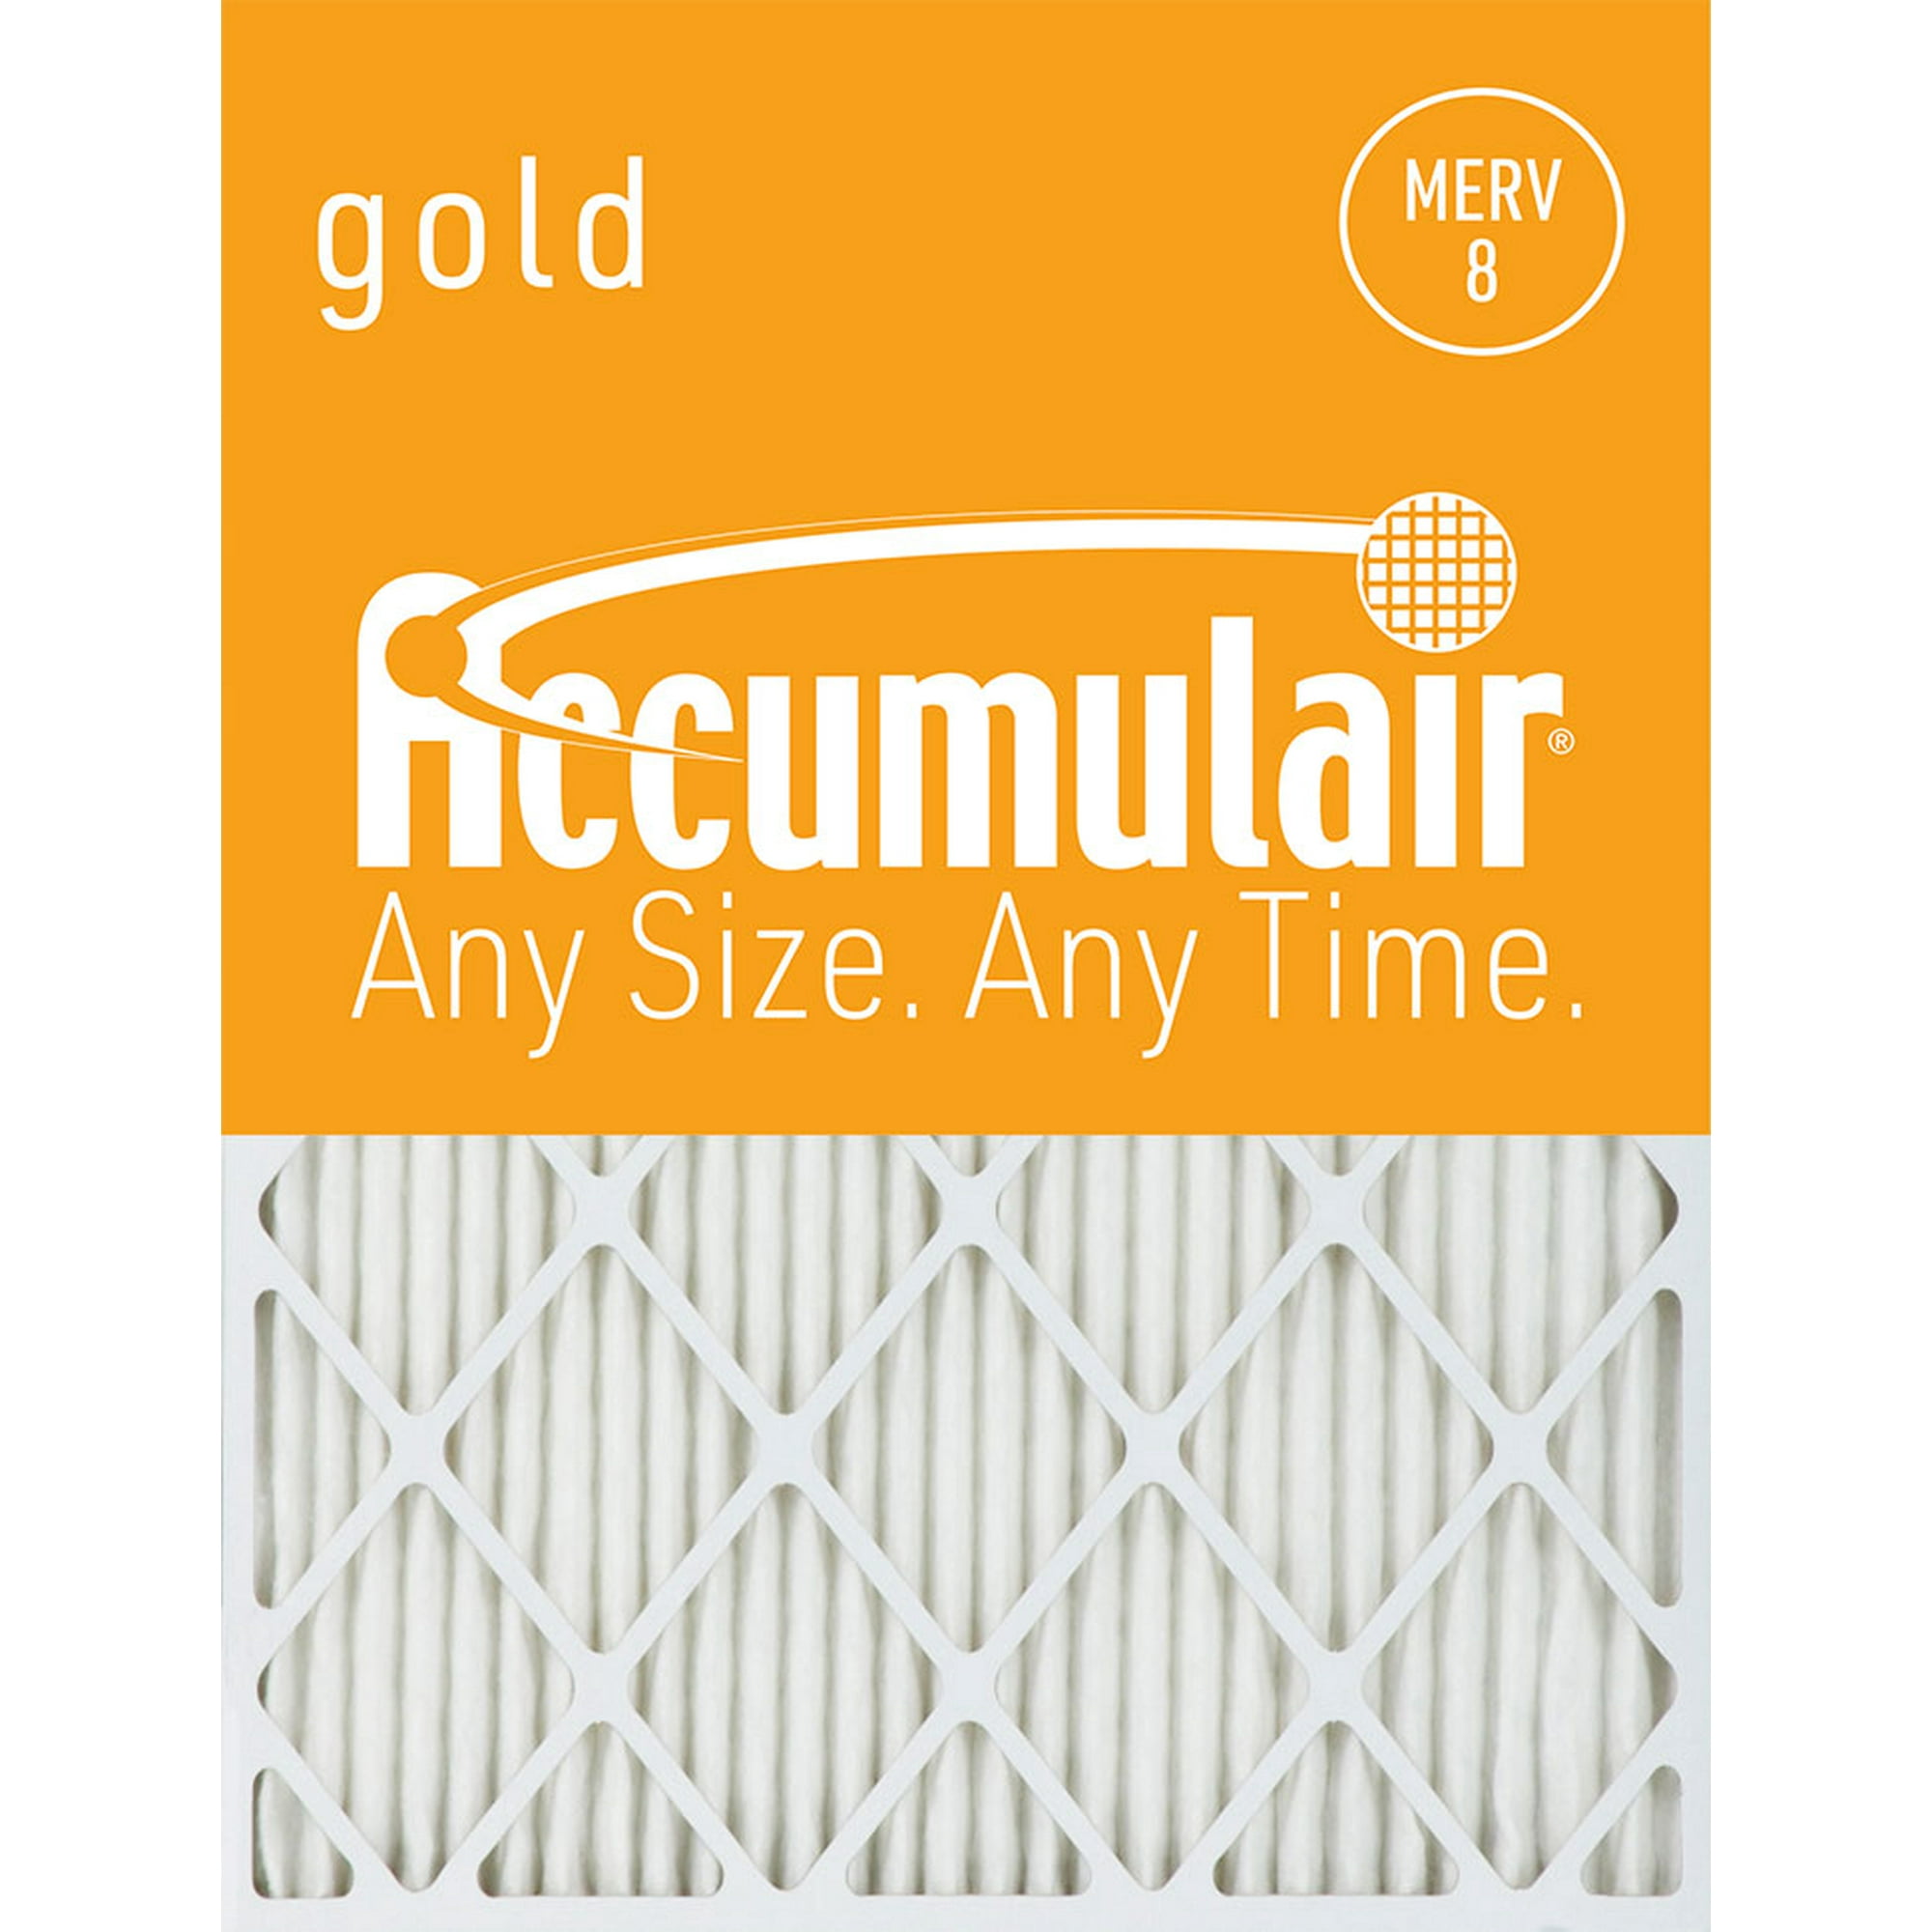 MERV 8 Air Filter/Furnace Filter 2 Pack Accumulair Gold 19x19x1 Actual Size 